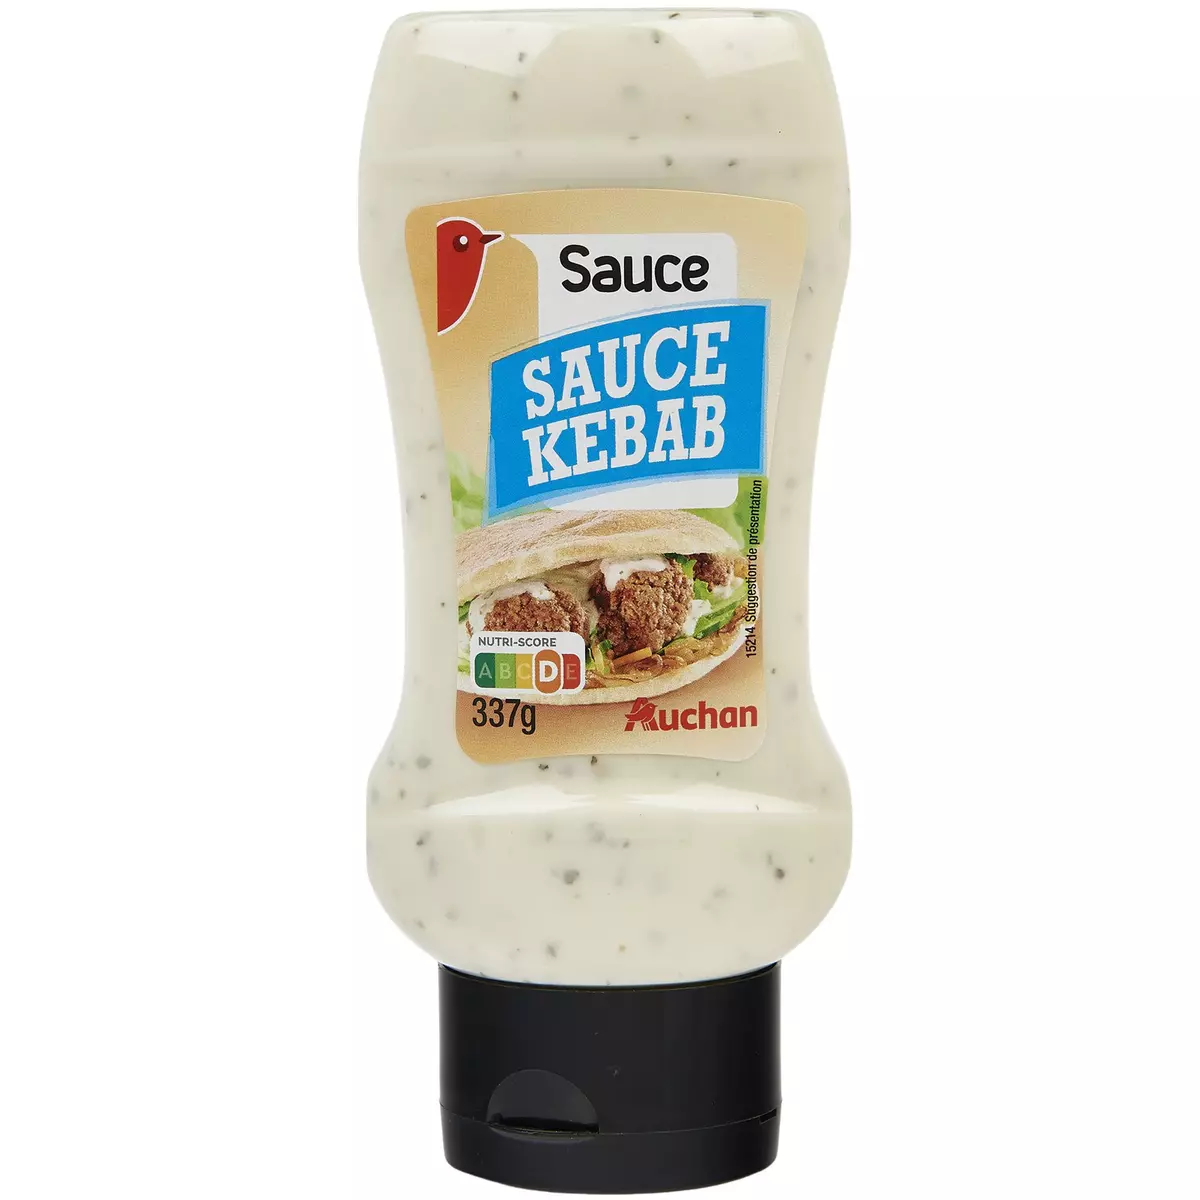 AUCHAN Sauce kebab flacon souple 337g pas cher 